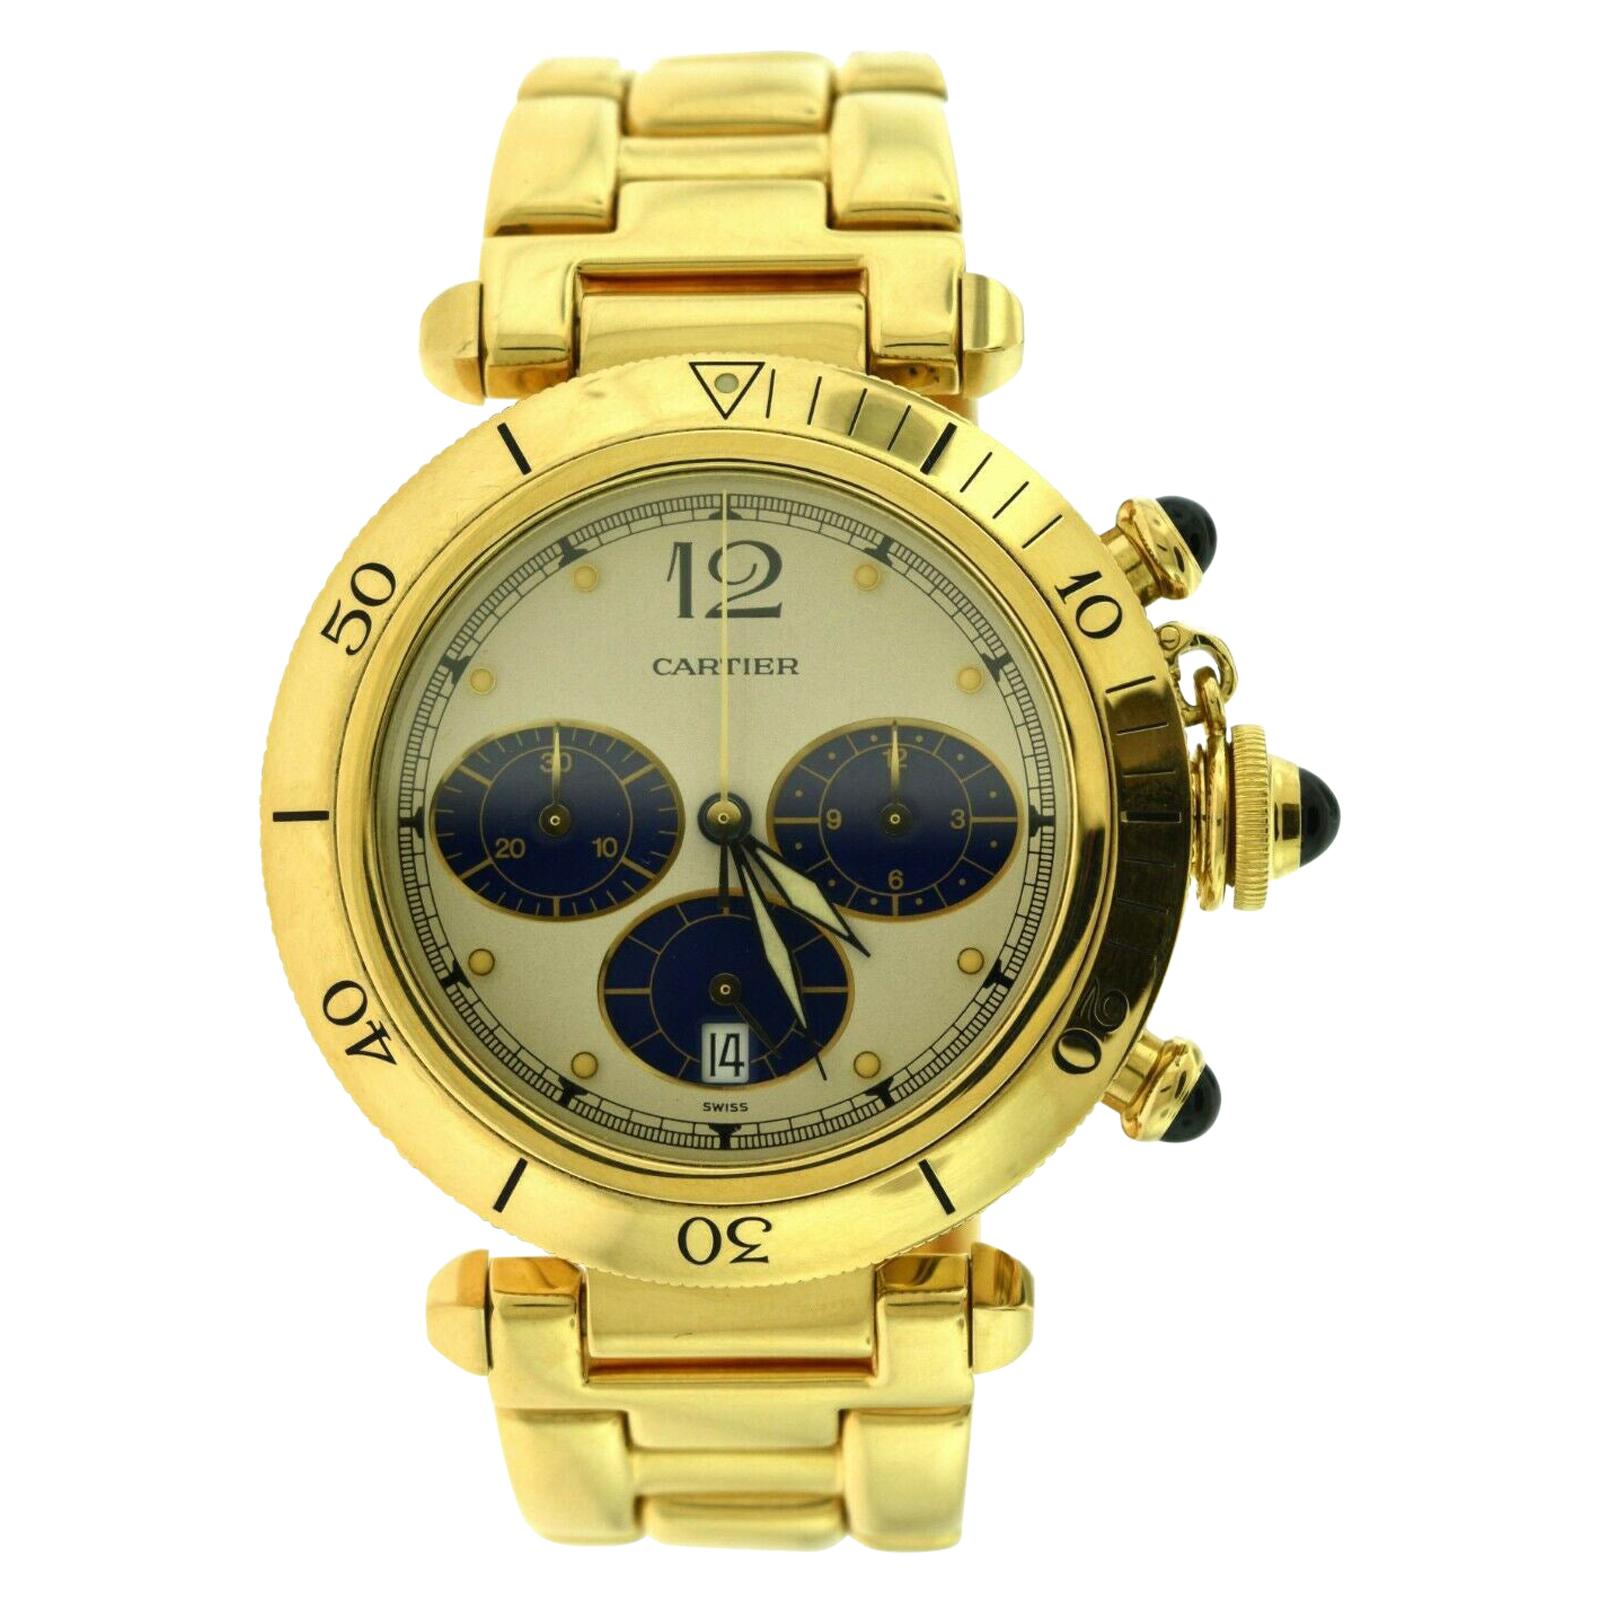 Cartier Pasha Ref. 30009 18 Karat Yellow Gold Chronograph Dial Watch